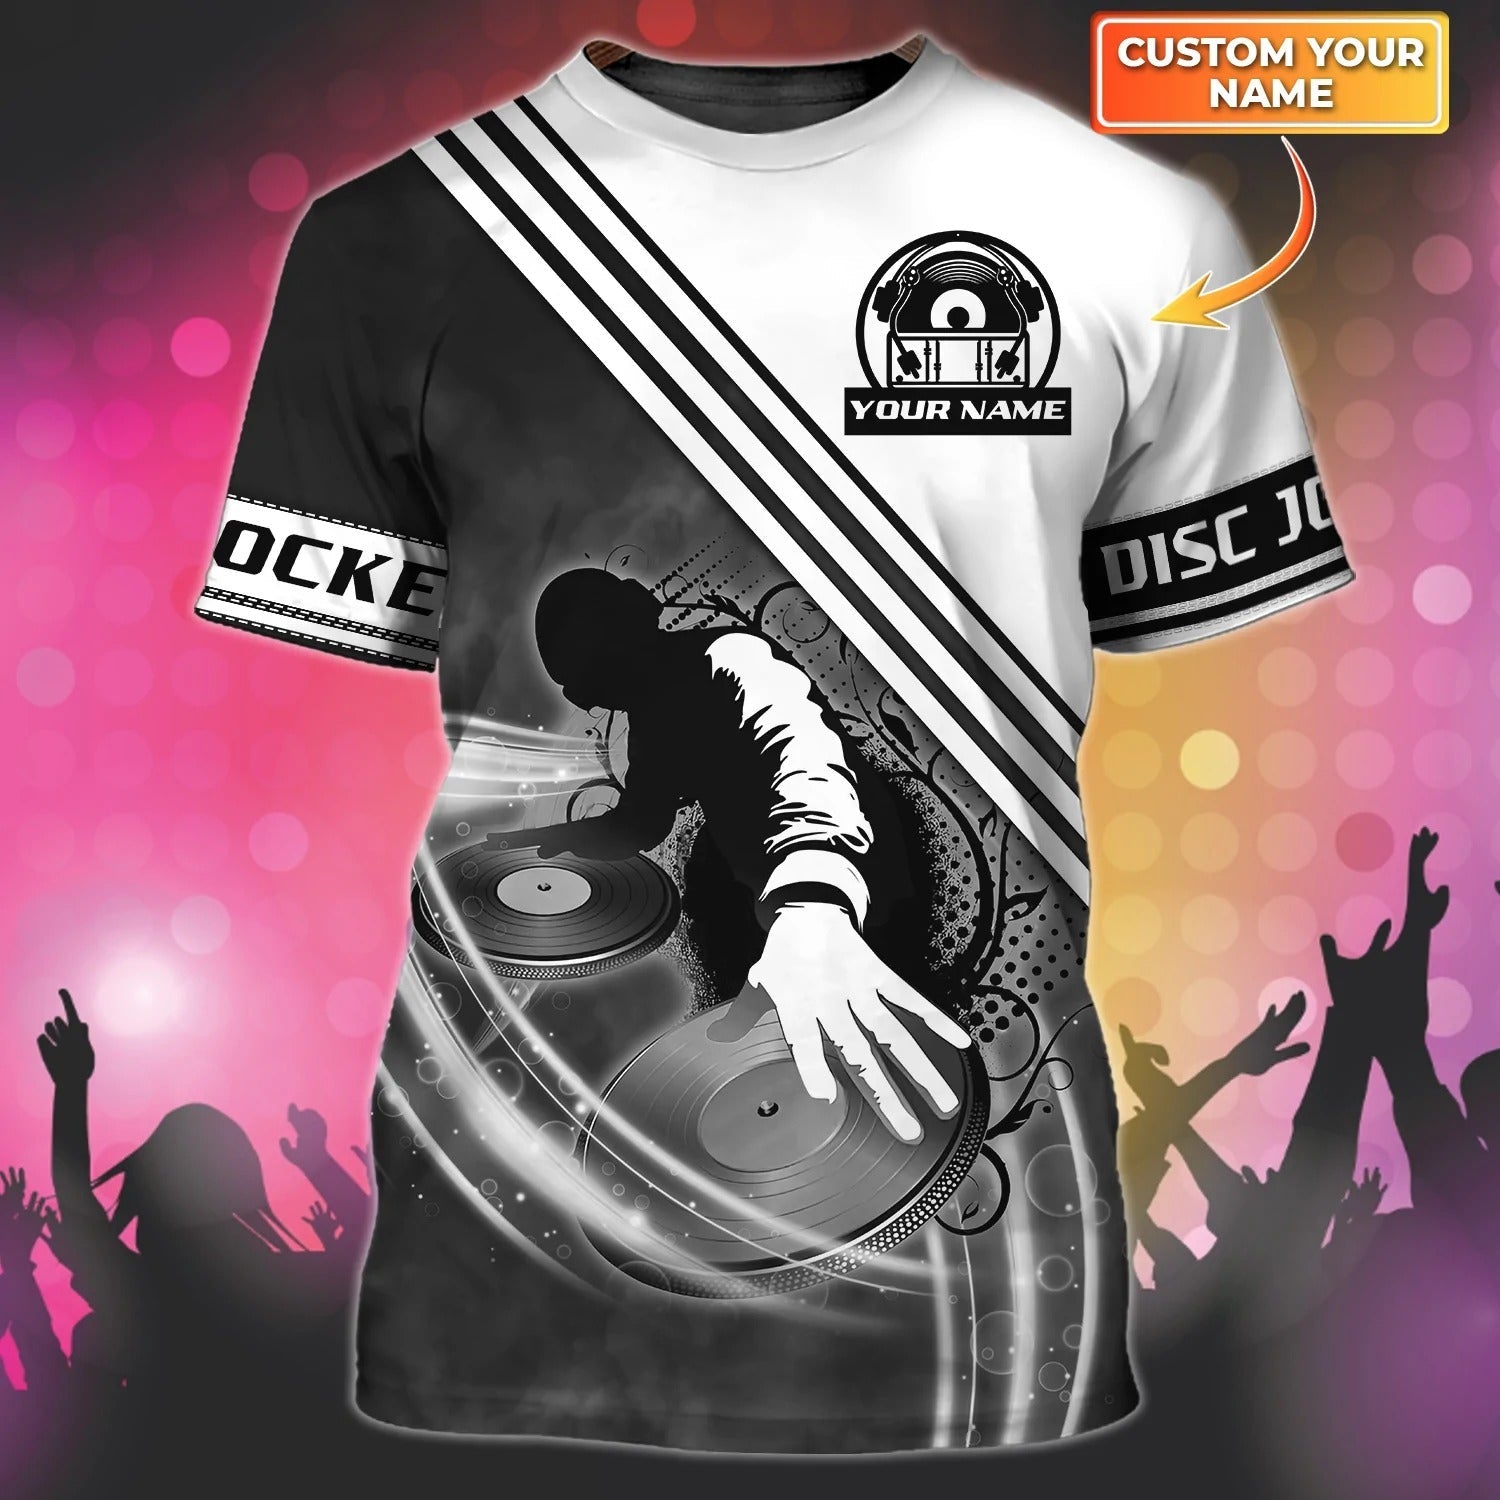 Personalized With Name 3D T Shirt For Dj Men Women/ Dj Shirts/ Dj Night Club T Shirts